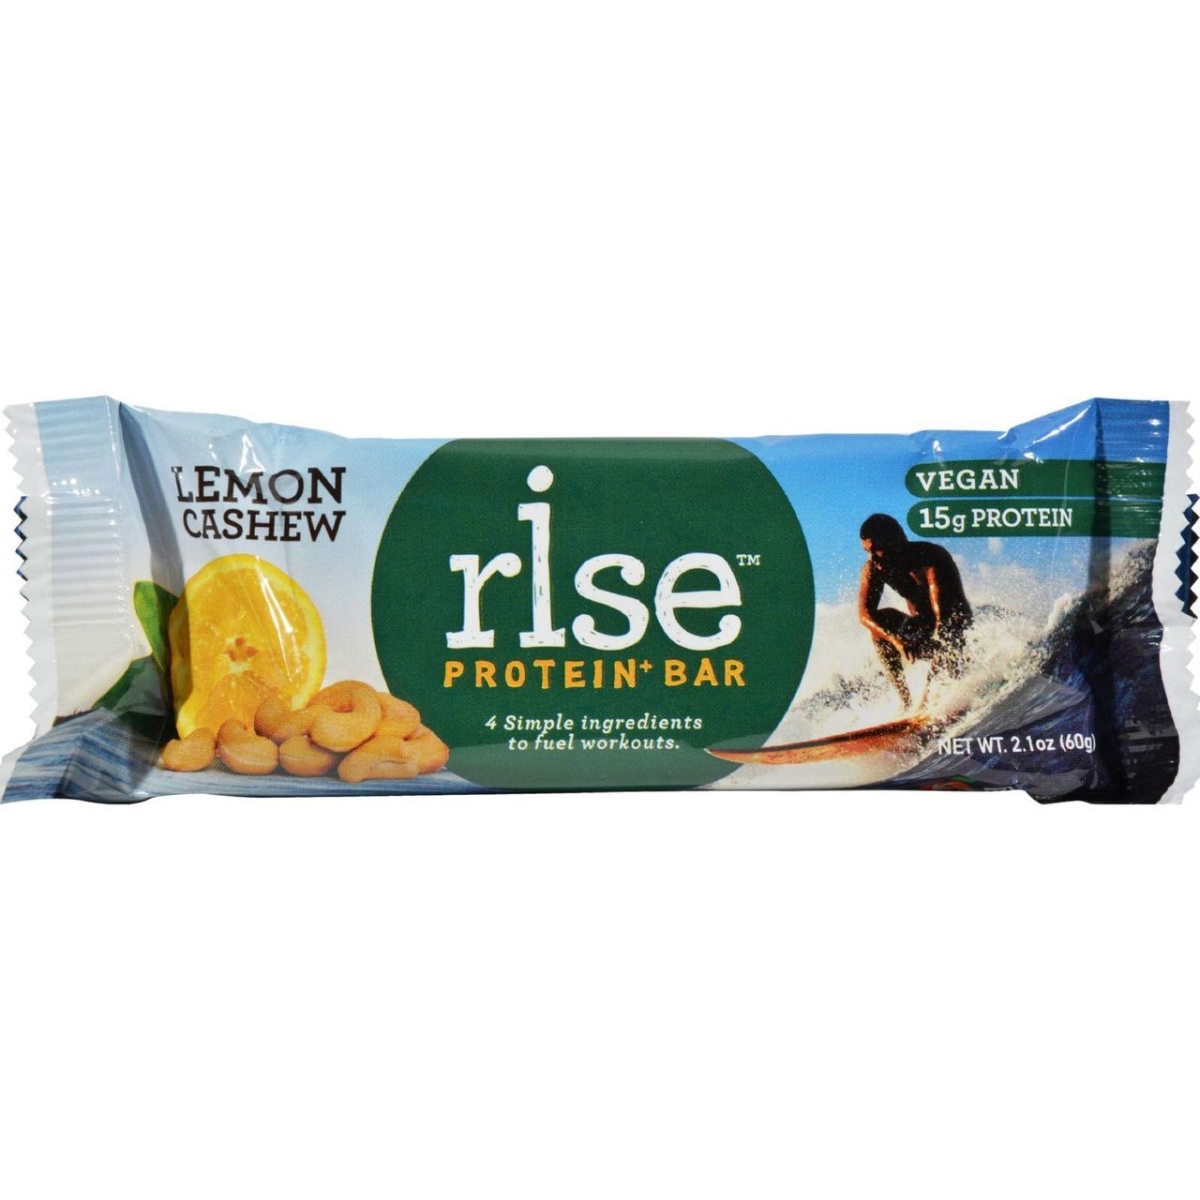 Hg1521731 2.1 Oz Rise Protein Plus Bar - Lemon Cashew, Case Of 12